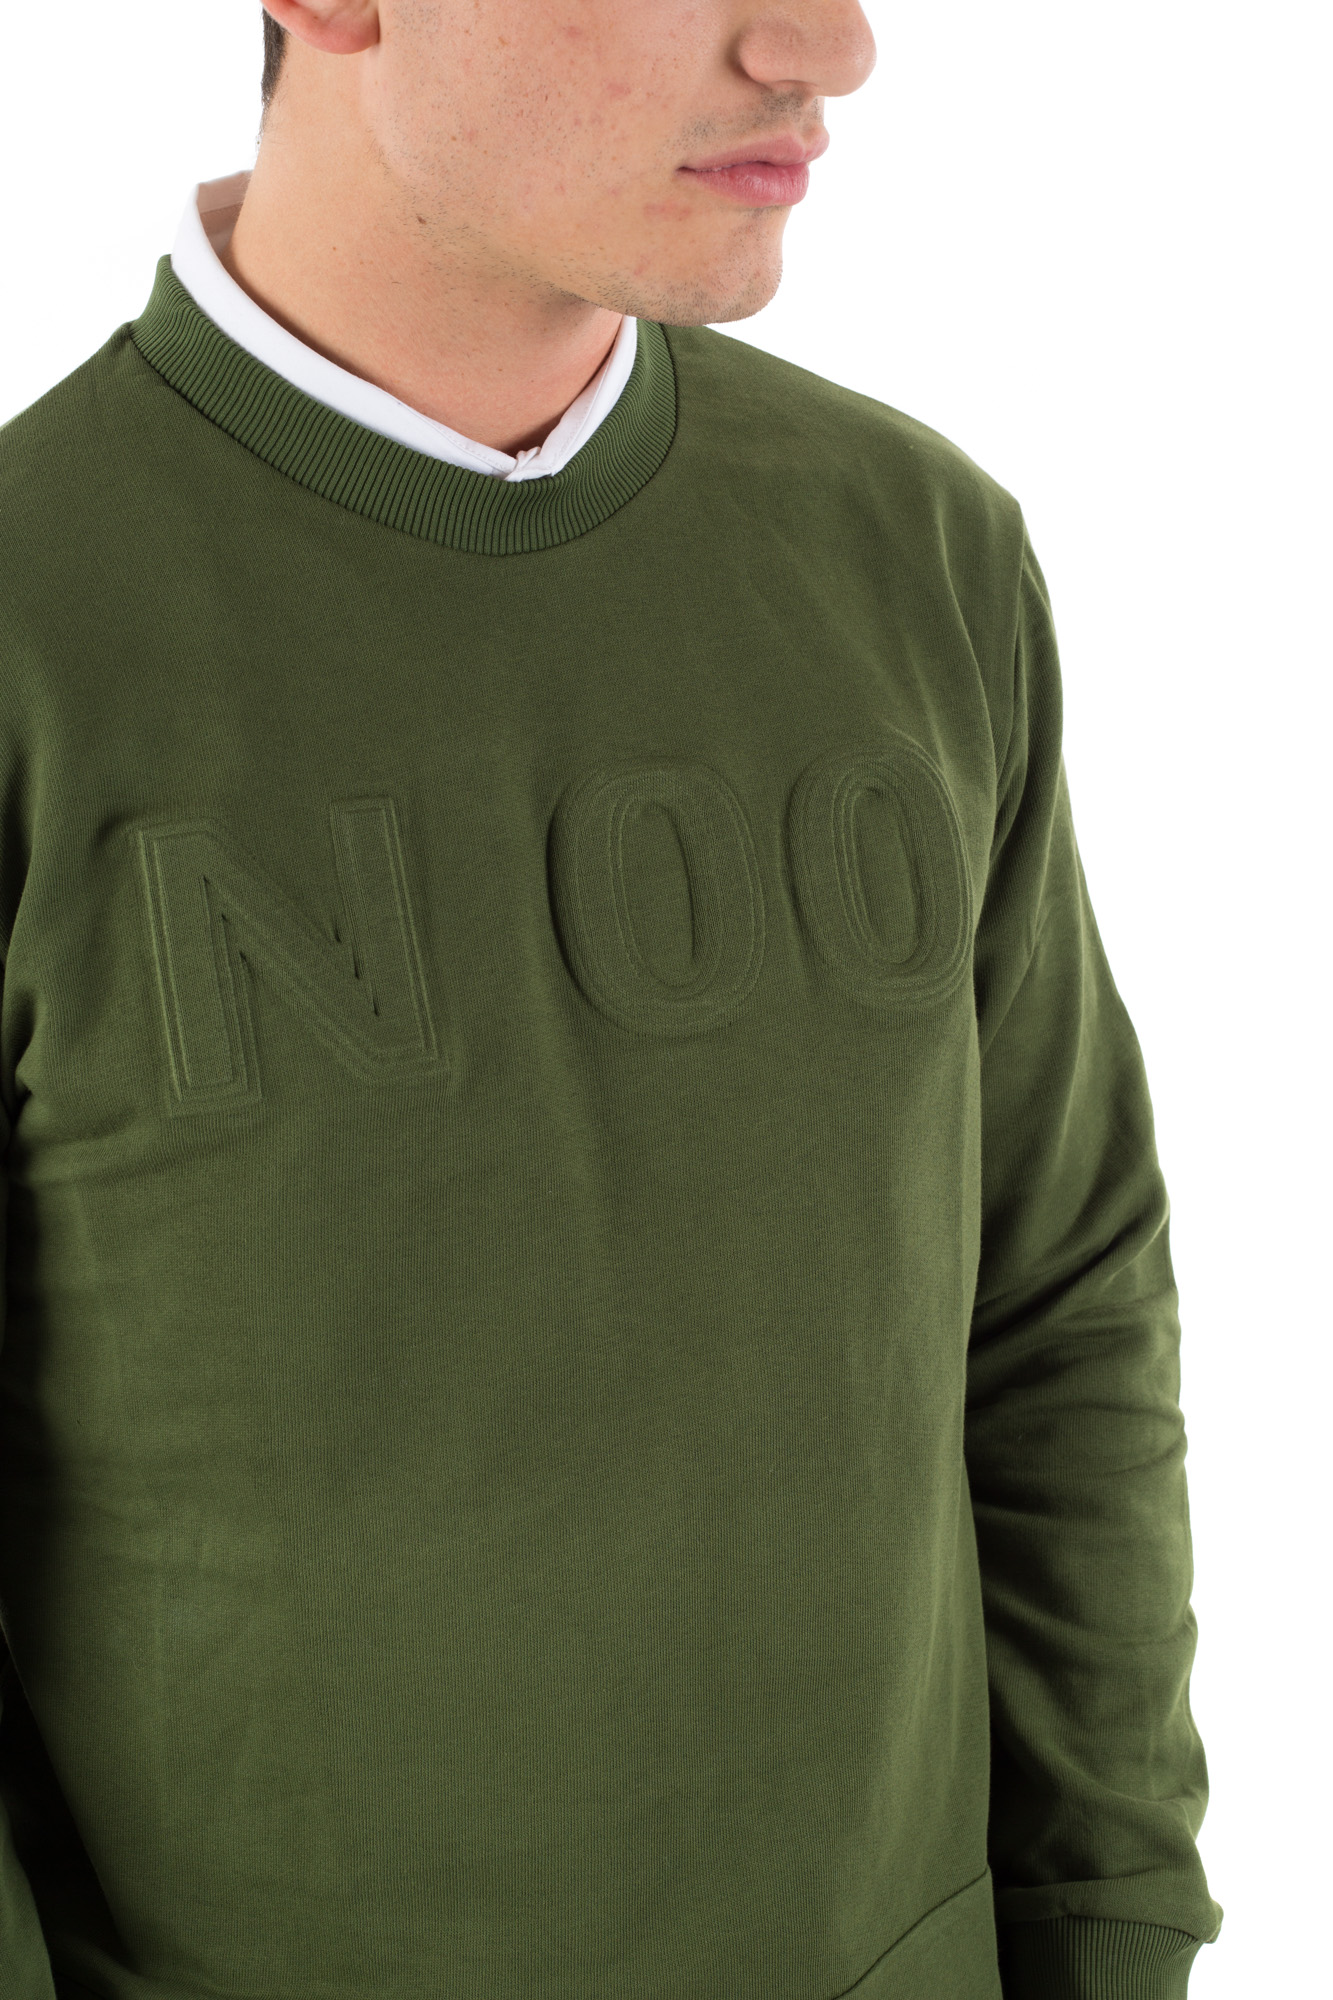 Numero 00 - Olive sweatshirt with front logo